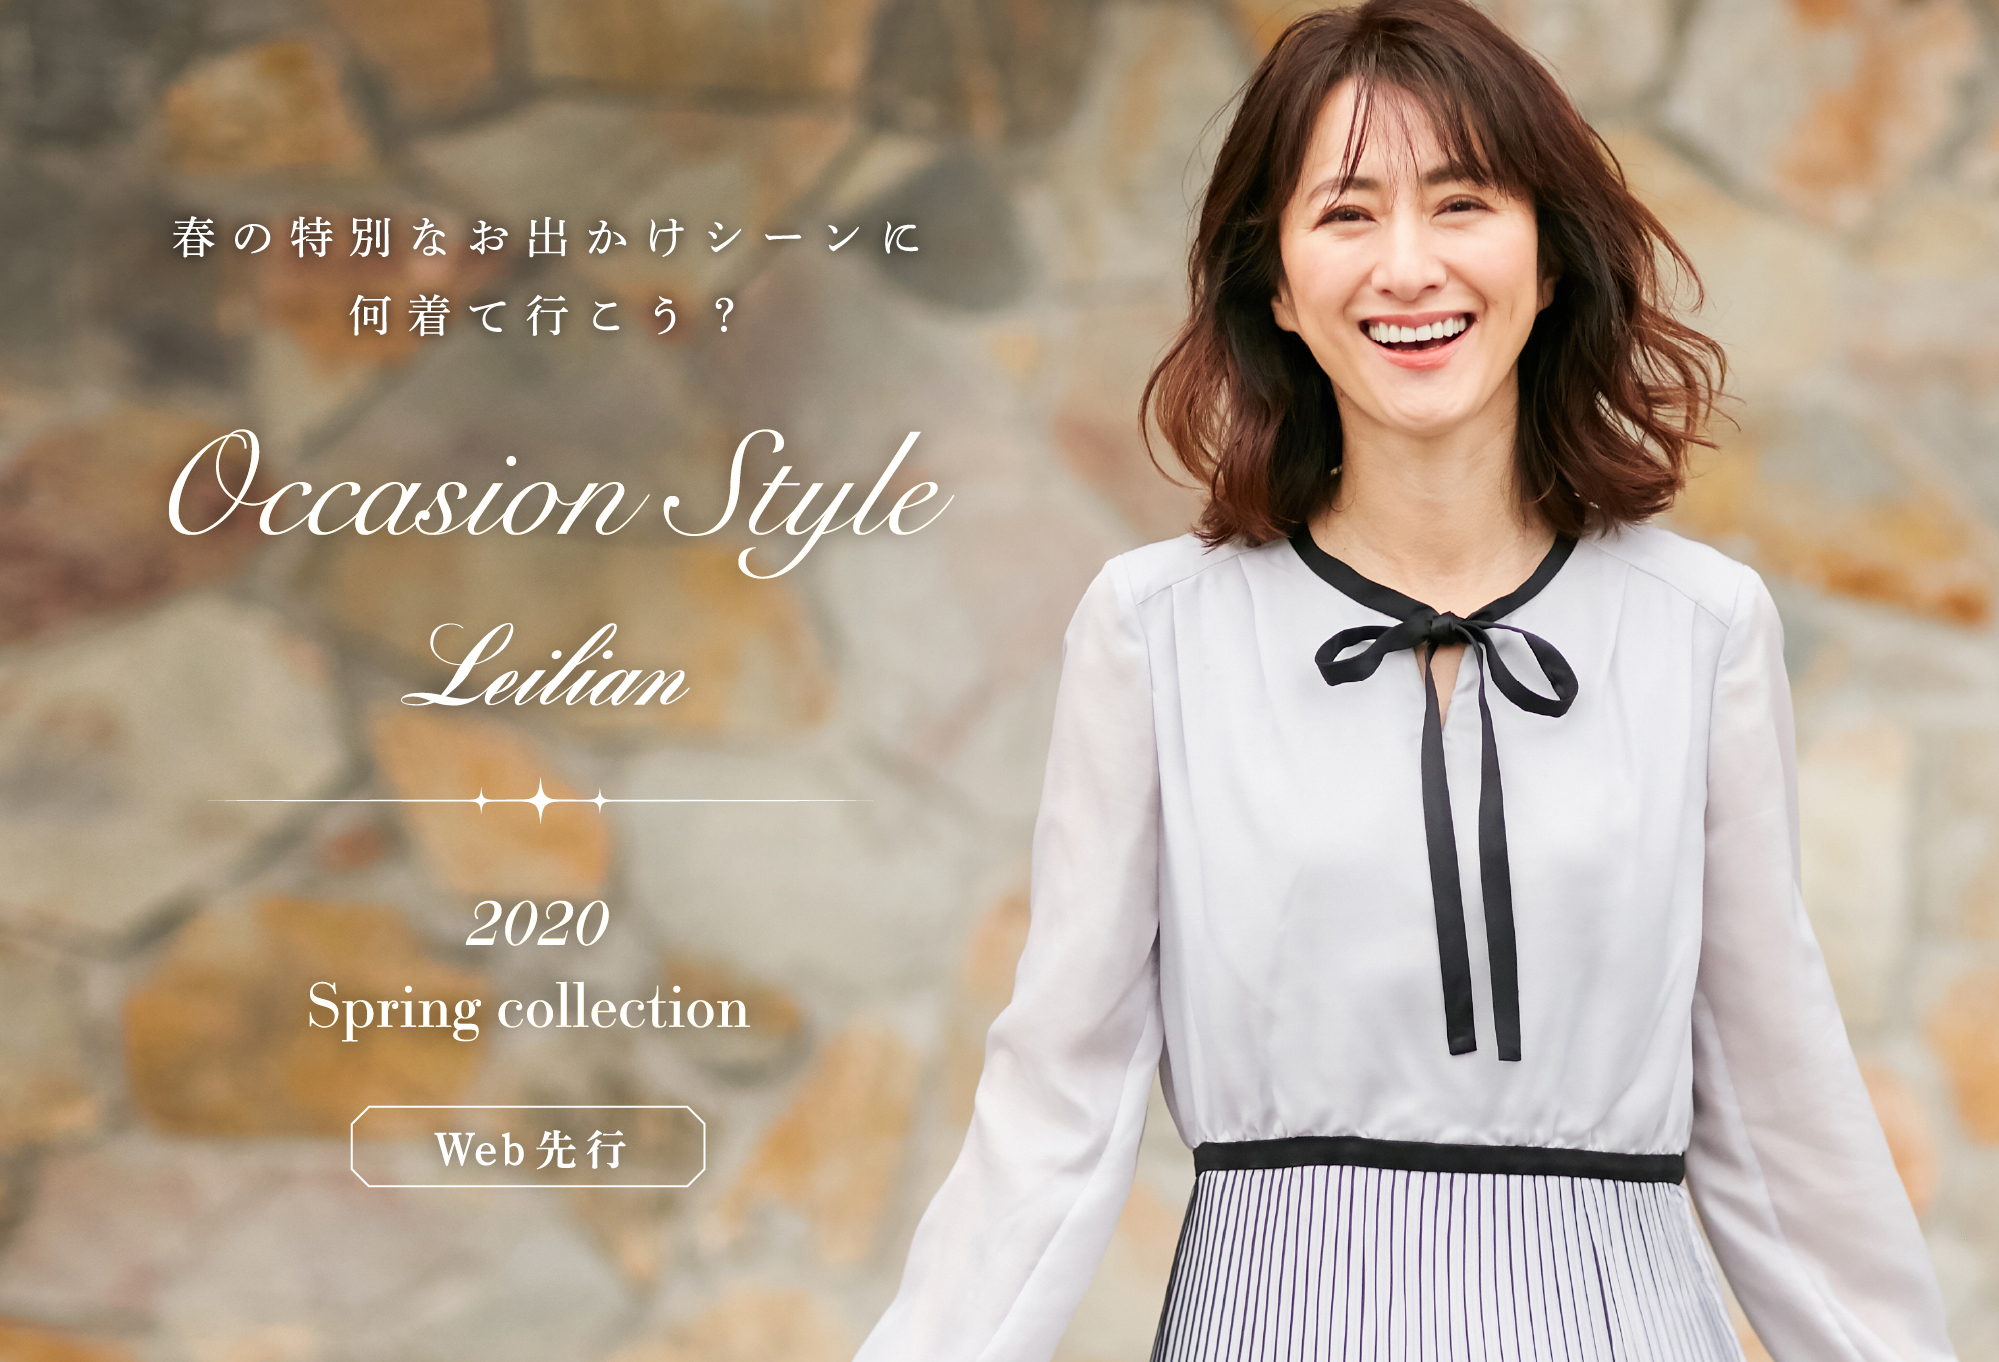 Leilian ICXgA t̓ʂȂoV[ɉčsH Occasion Style 2020 Spring collection Webs